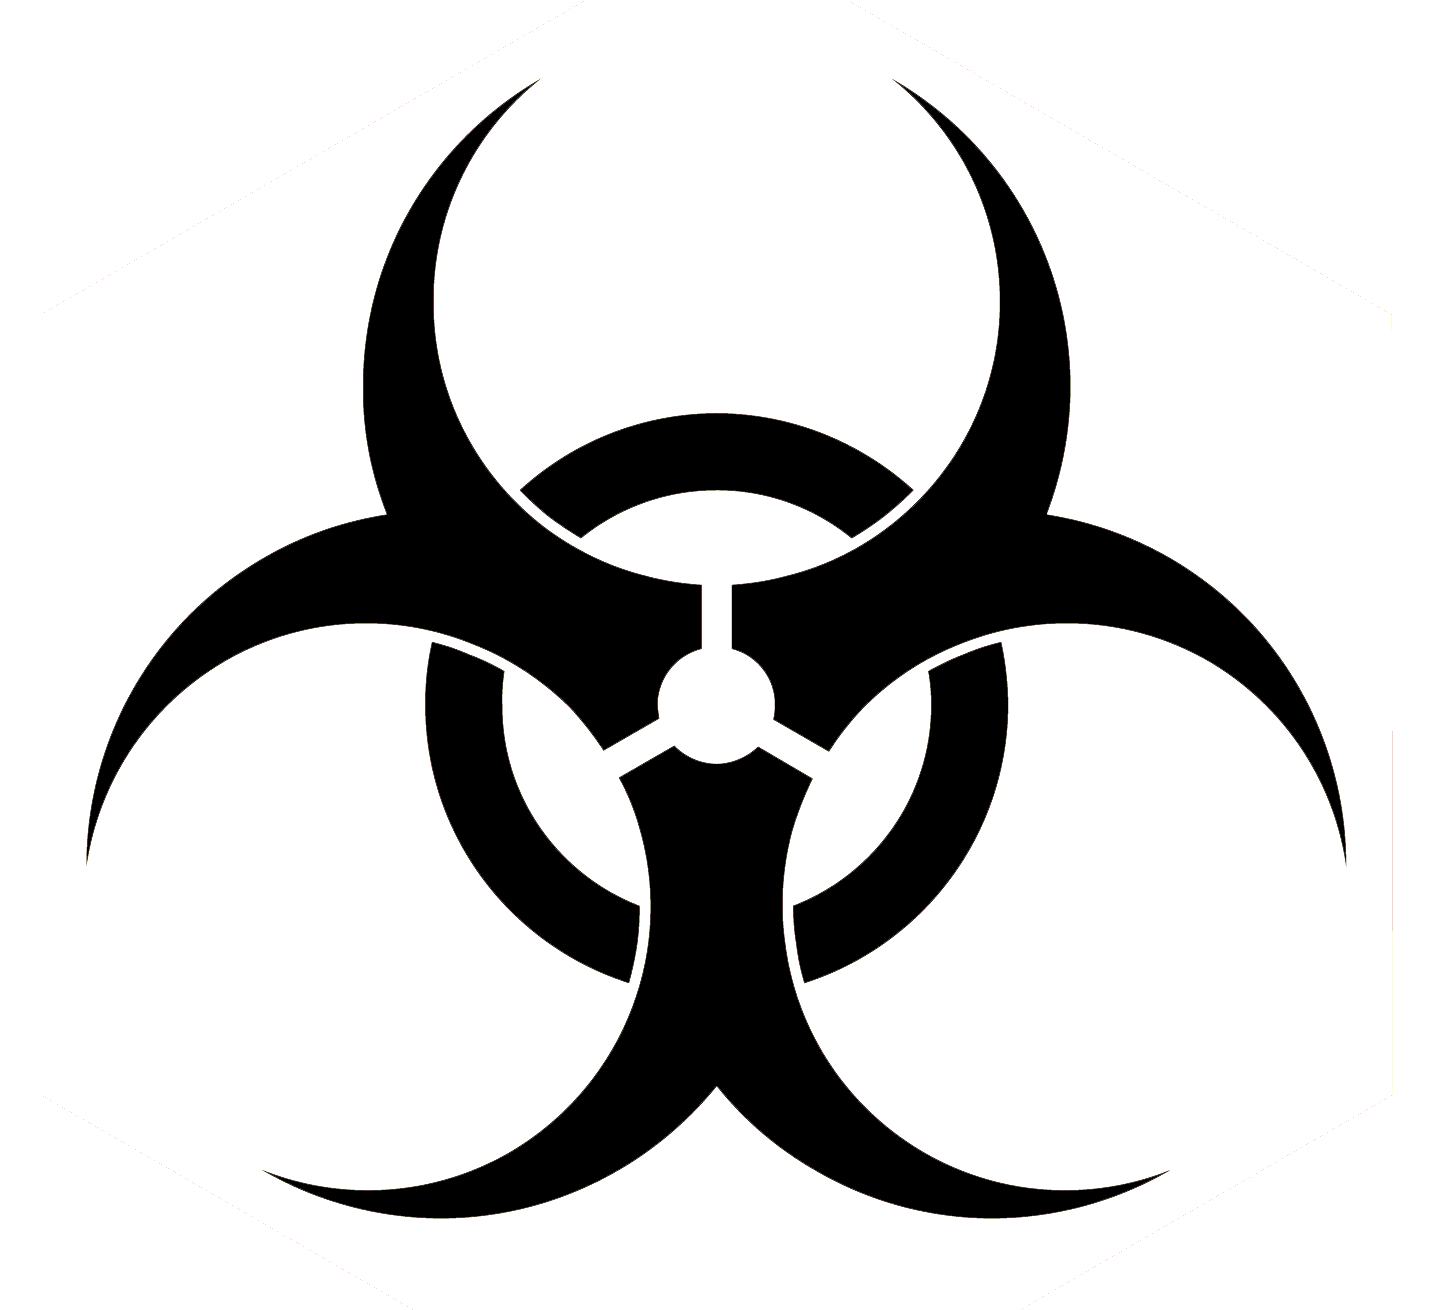 biohazard-symbol